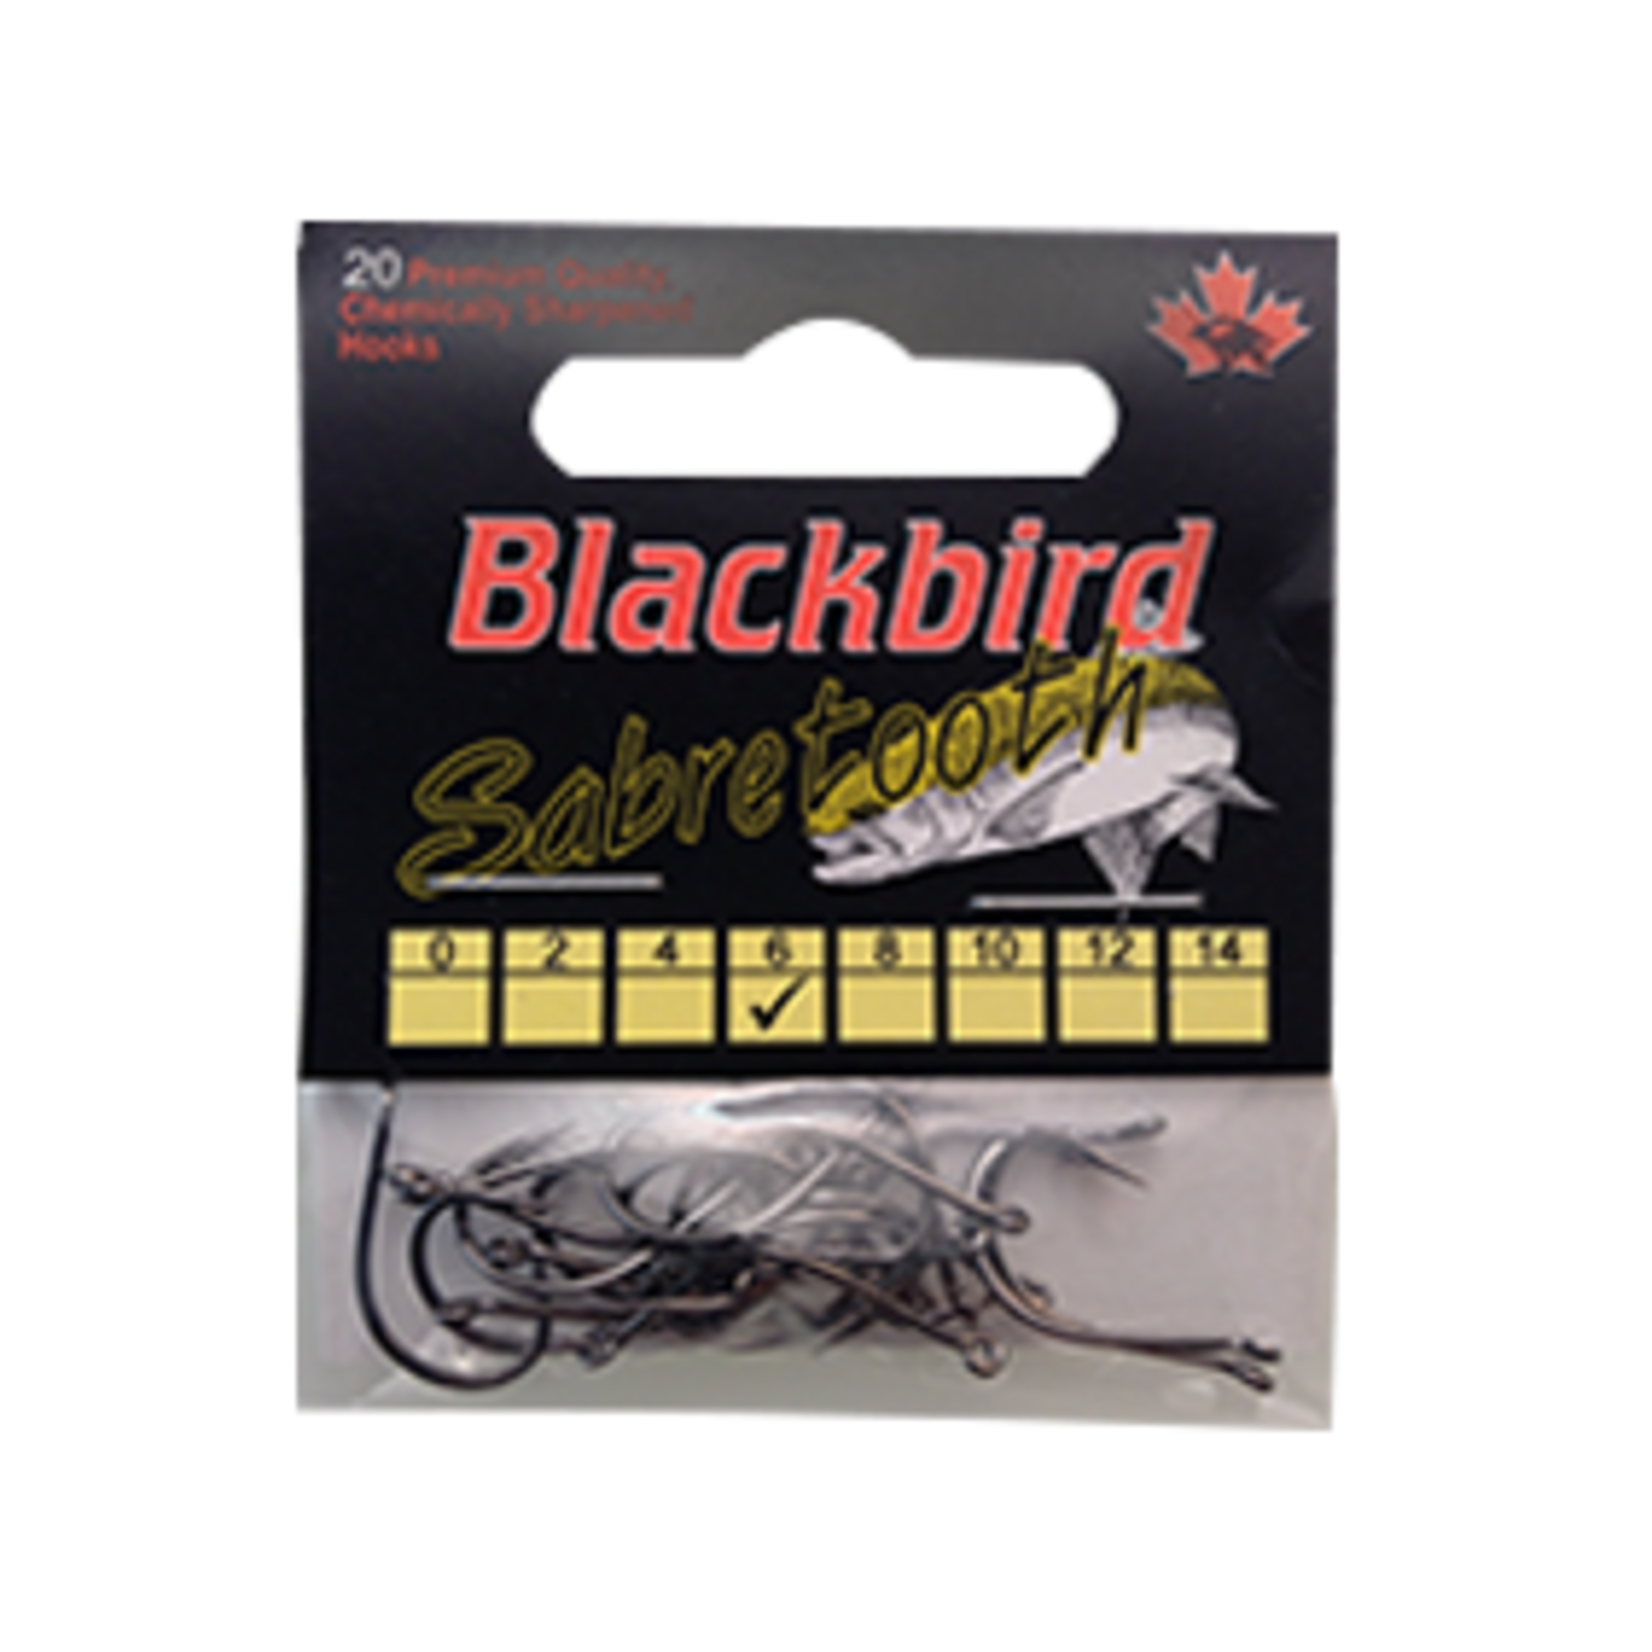 Black Bird Red Wing/ Black Bird SABRETOOTH EGG HOOK BRONZE CHEMICALLY SHARP 20/PK